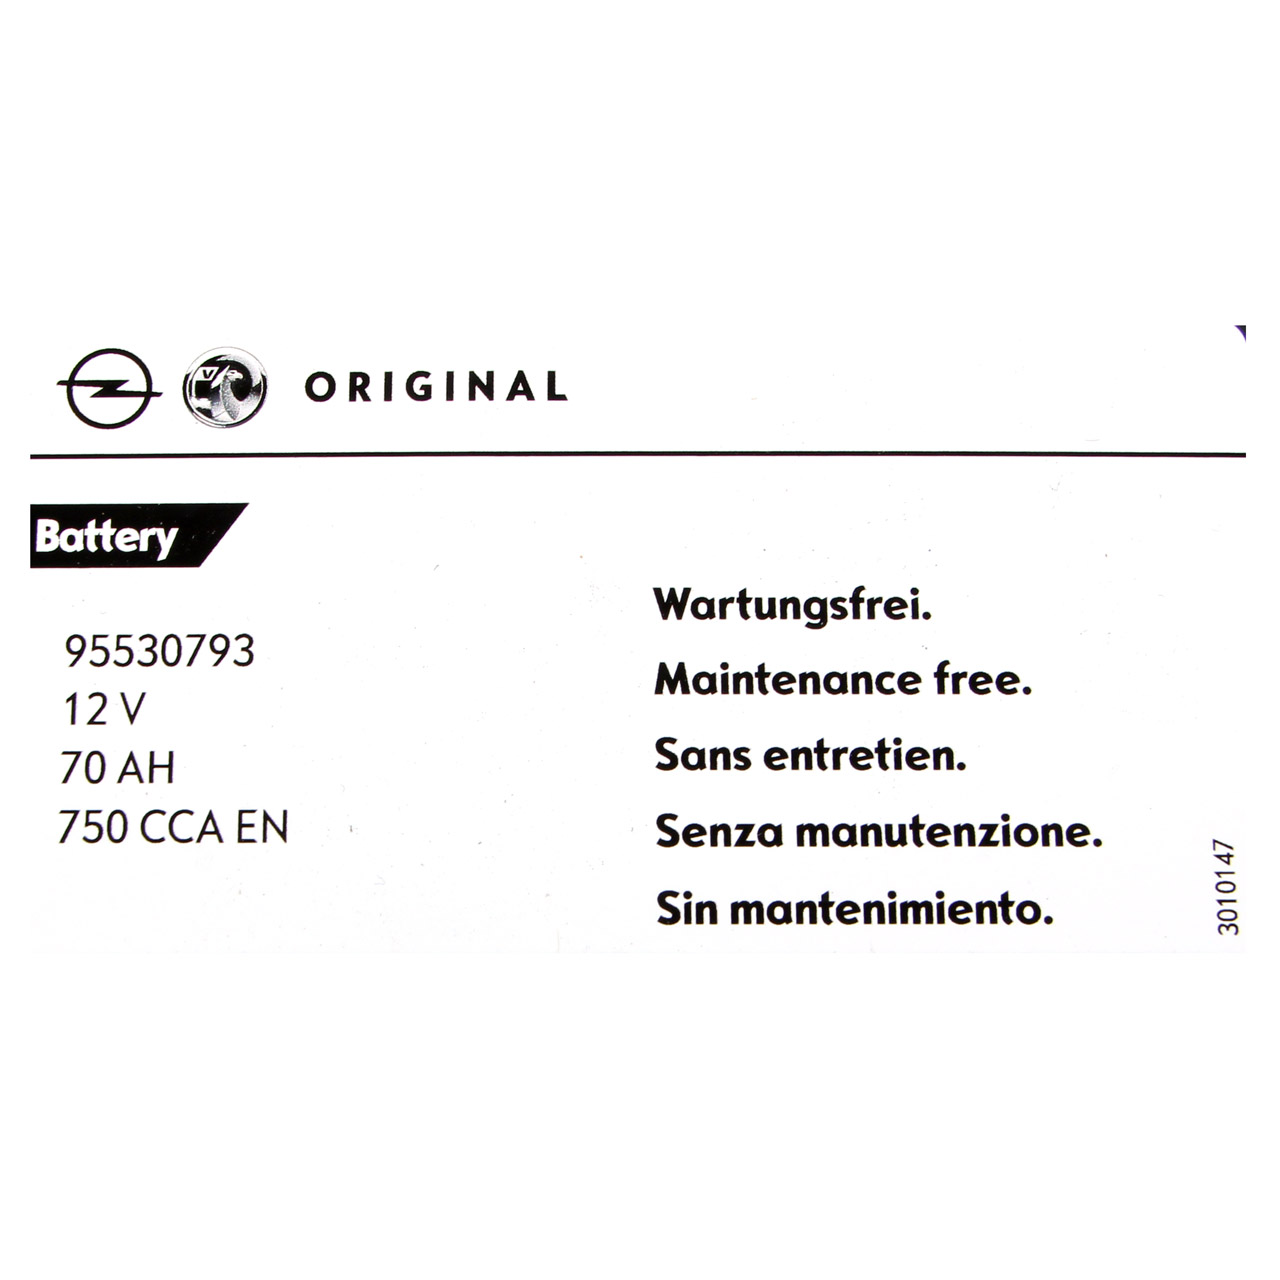 ORIGINAL GM Opel Autobatterie Starterbatterie 12V 70Ah 750 CCA EN 95530793